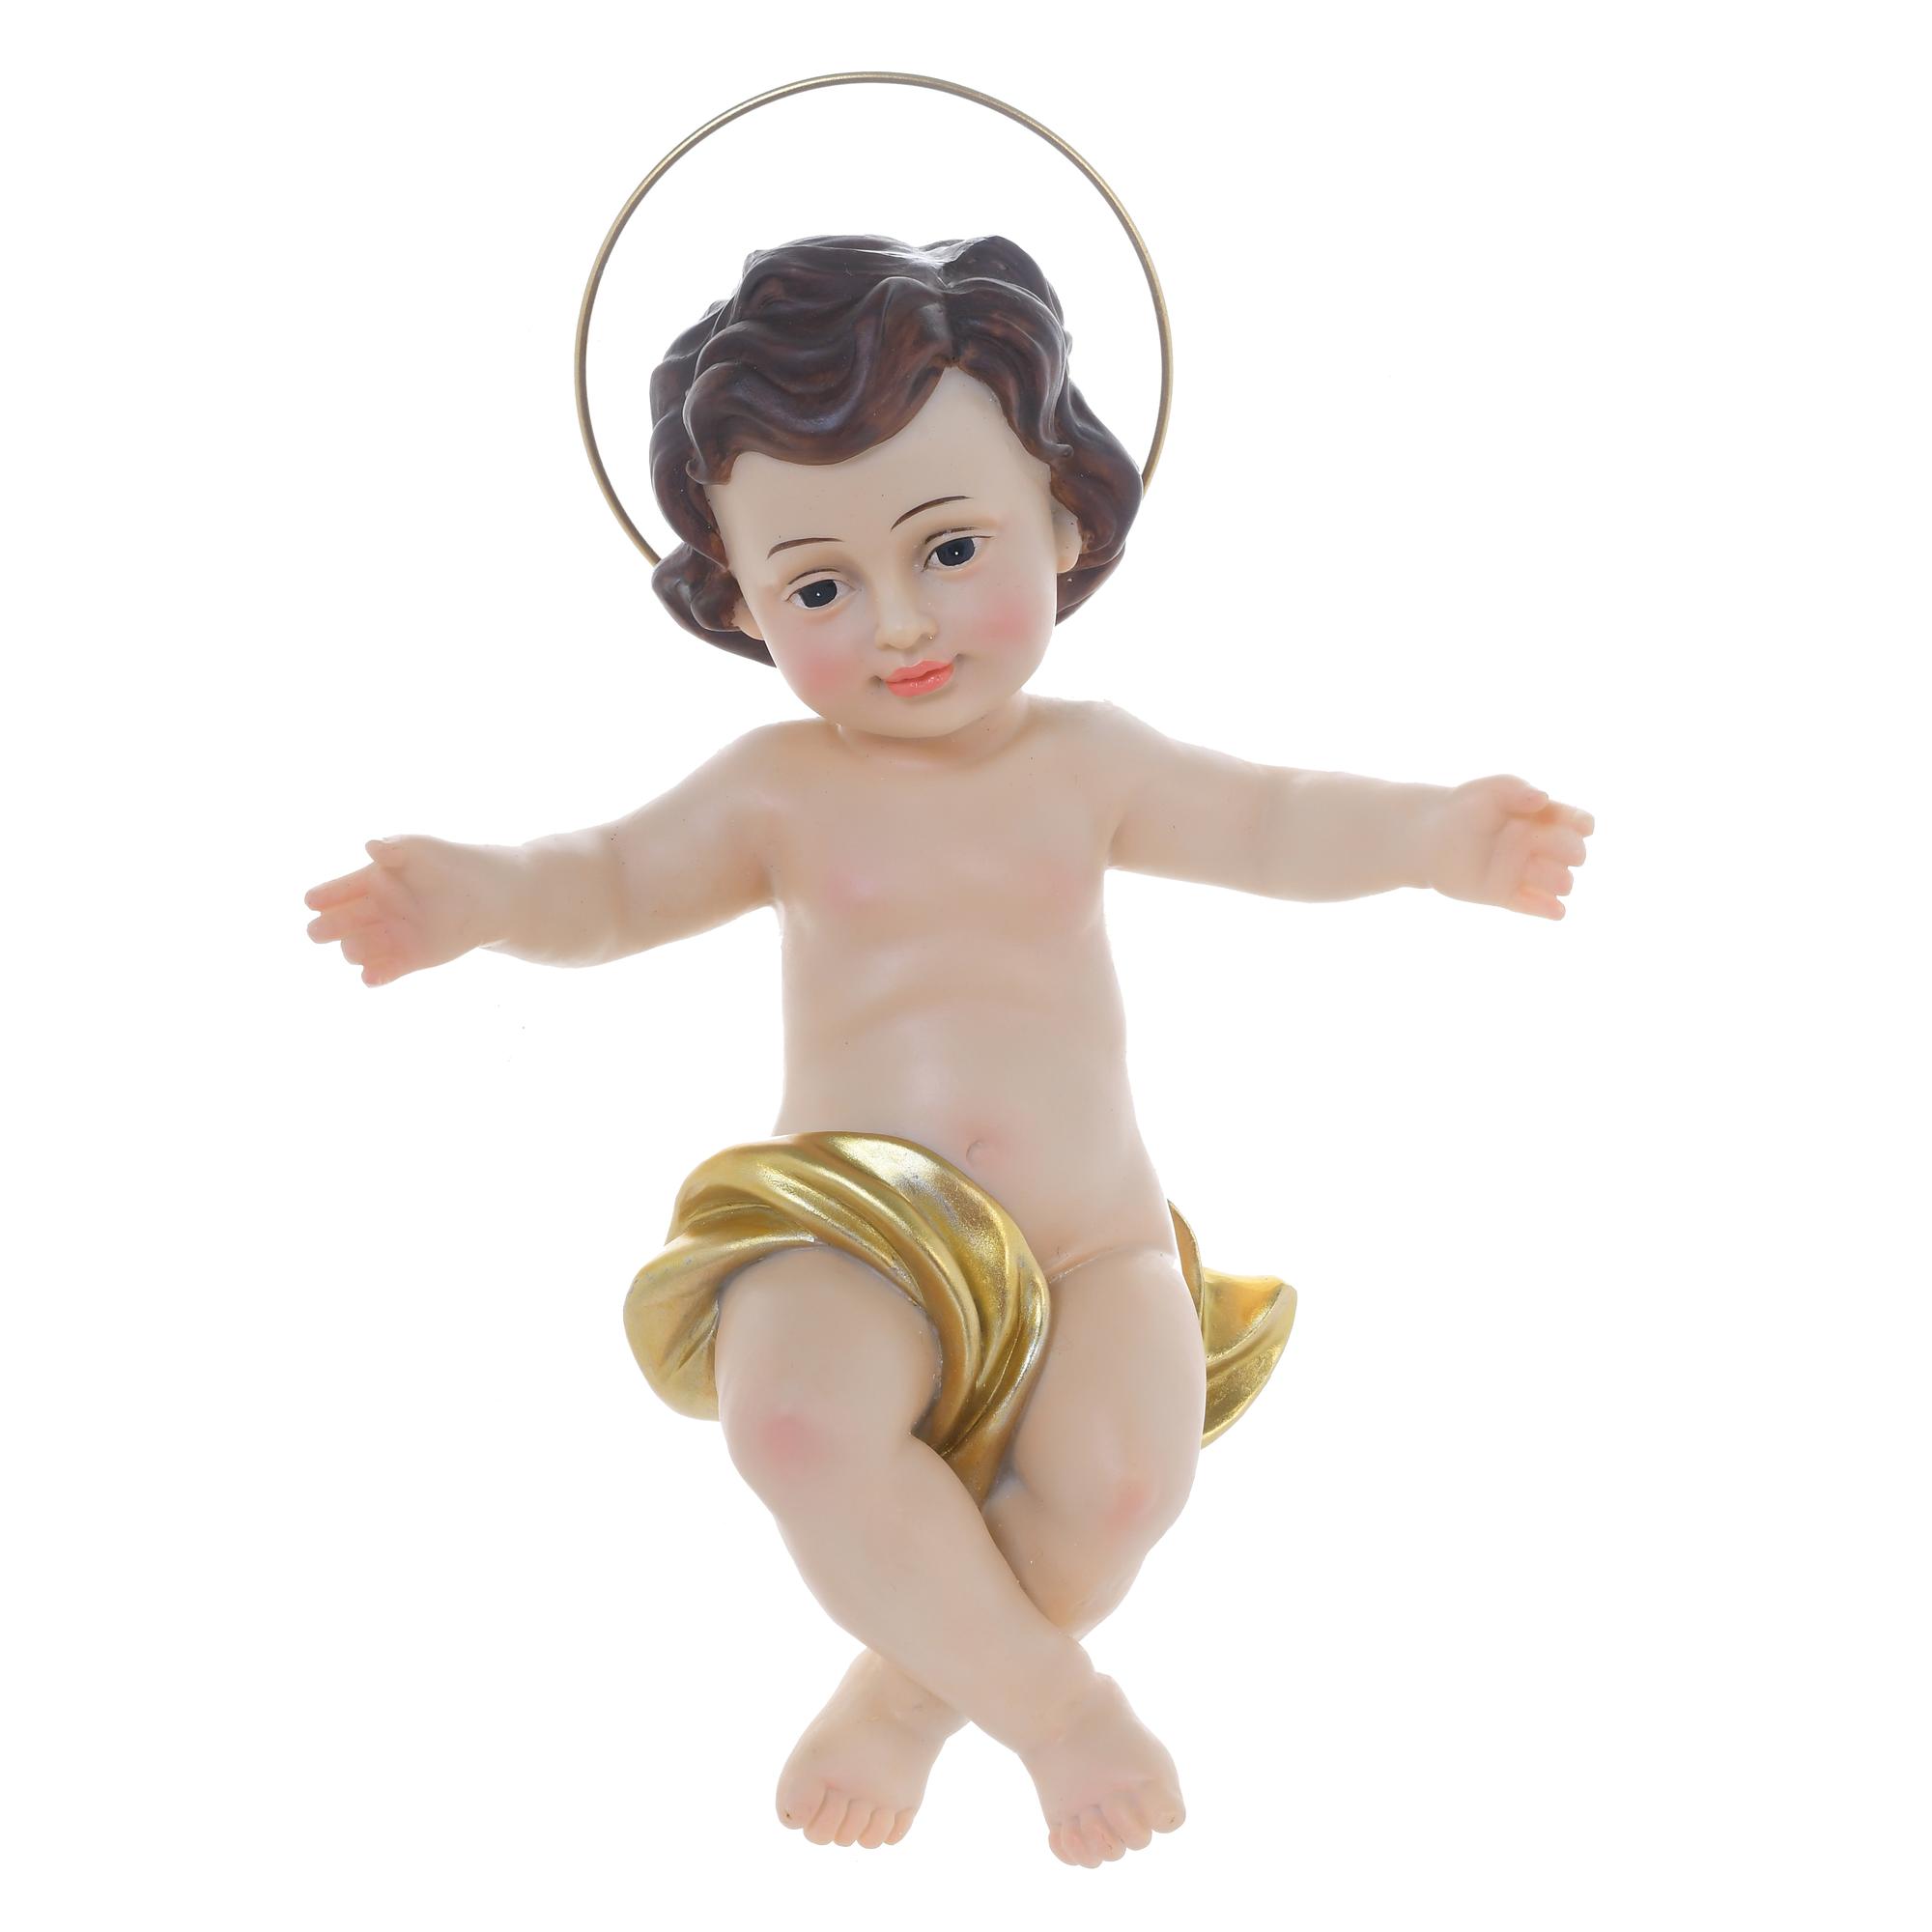 BABY JESUS 8.25 inch - 100-4900254